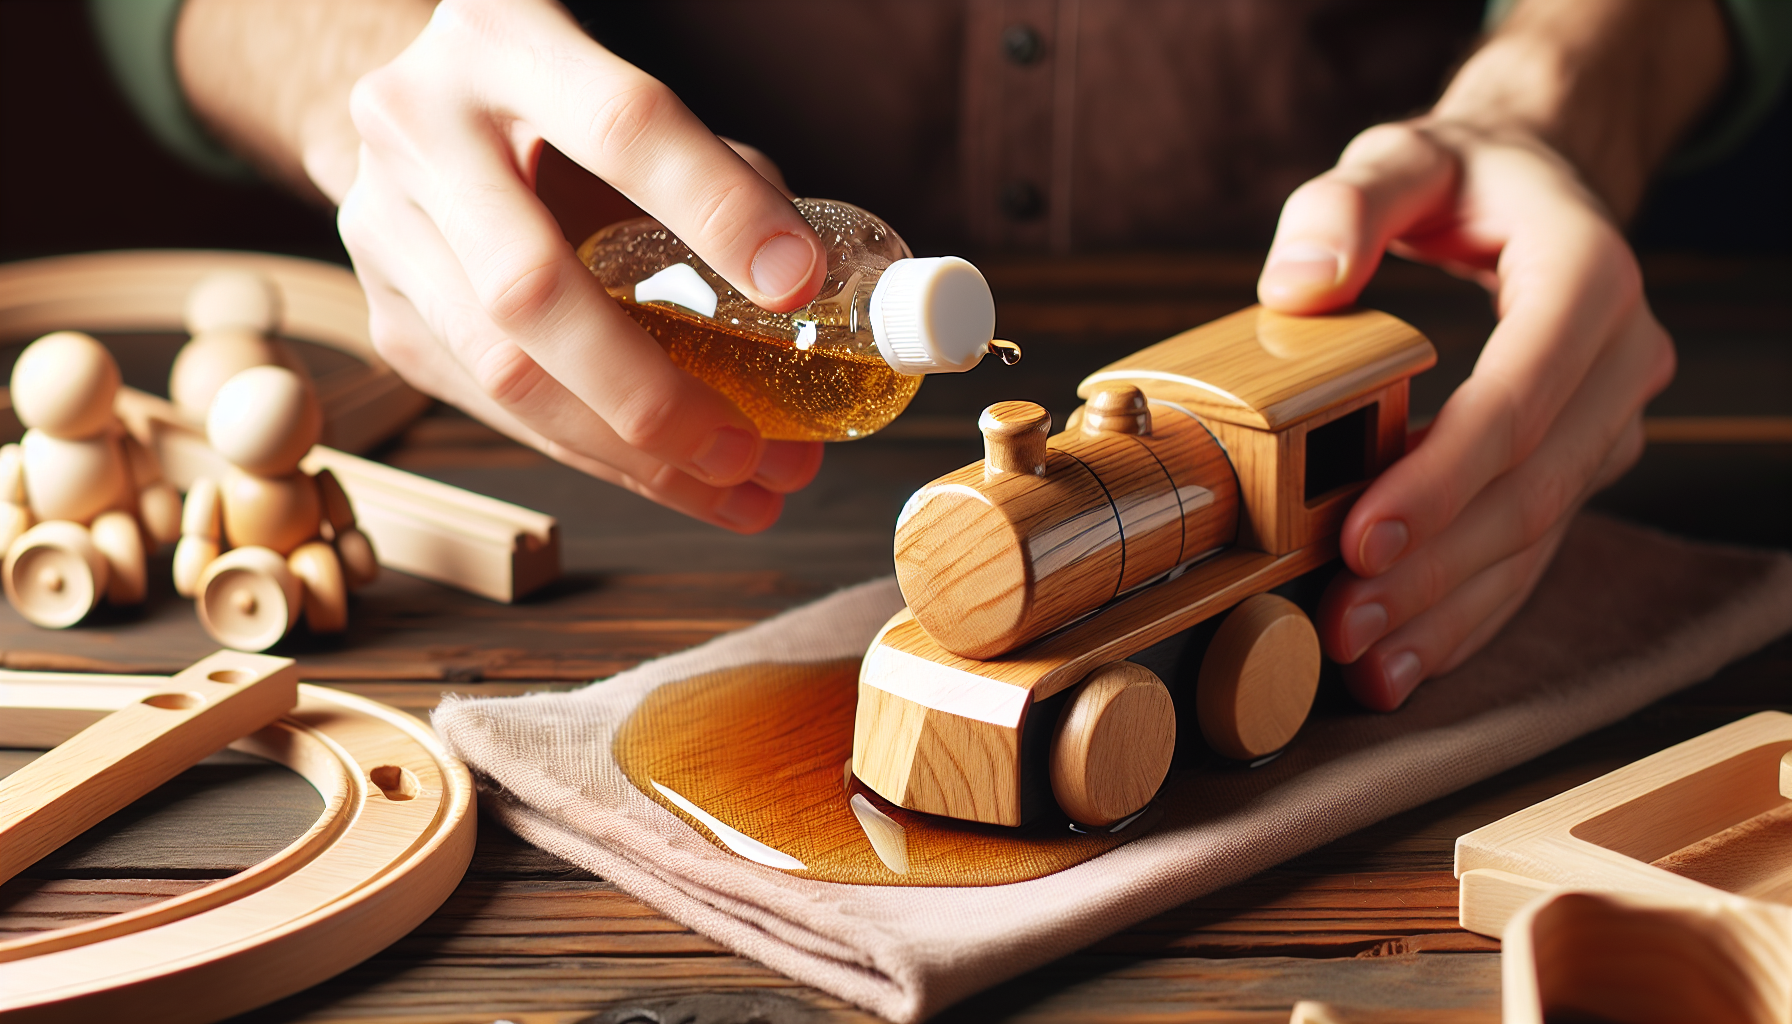 Moisturizing wooden toys with non-toxic oils